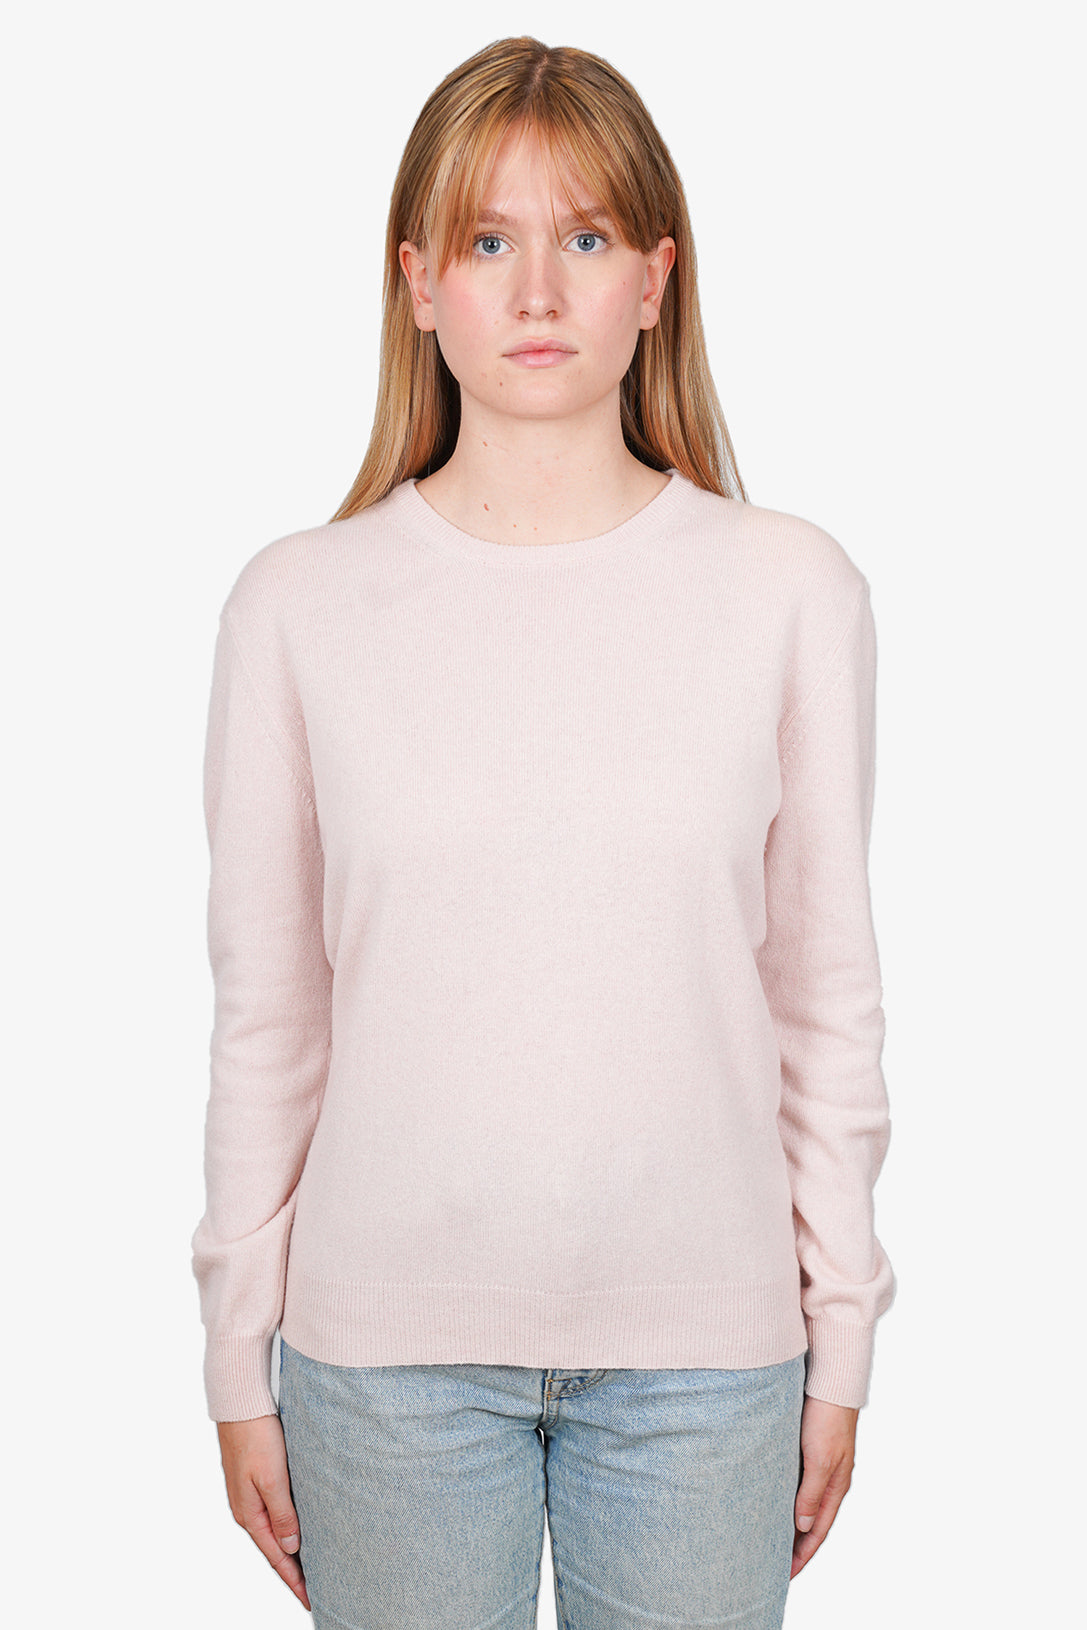 Max Mara Atelier Pink Cashmere Crewneck Sweater est sz M